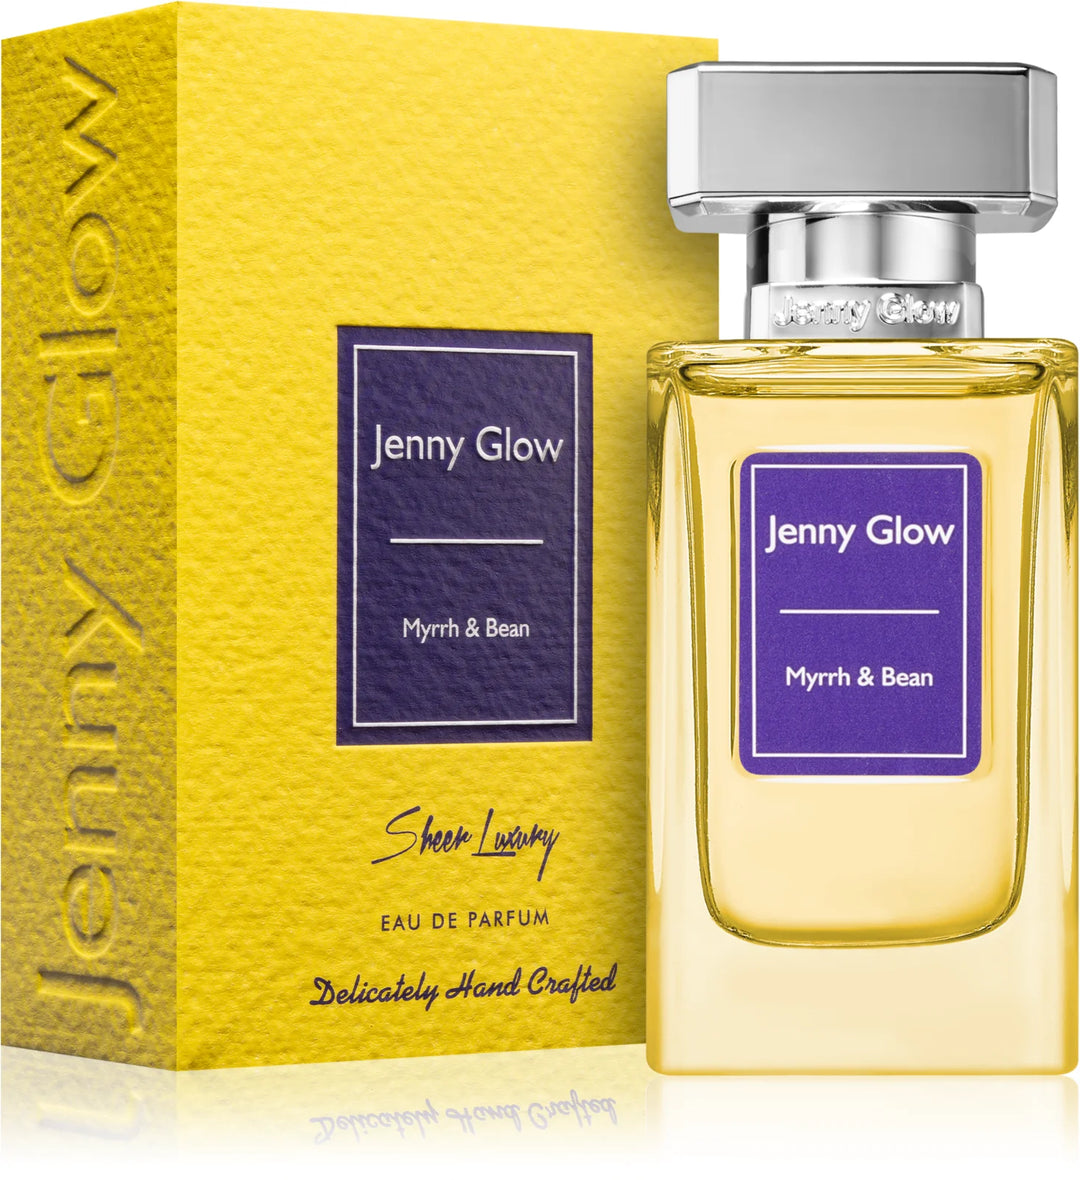 Jenny Glow Myrrh & Bean Perfume